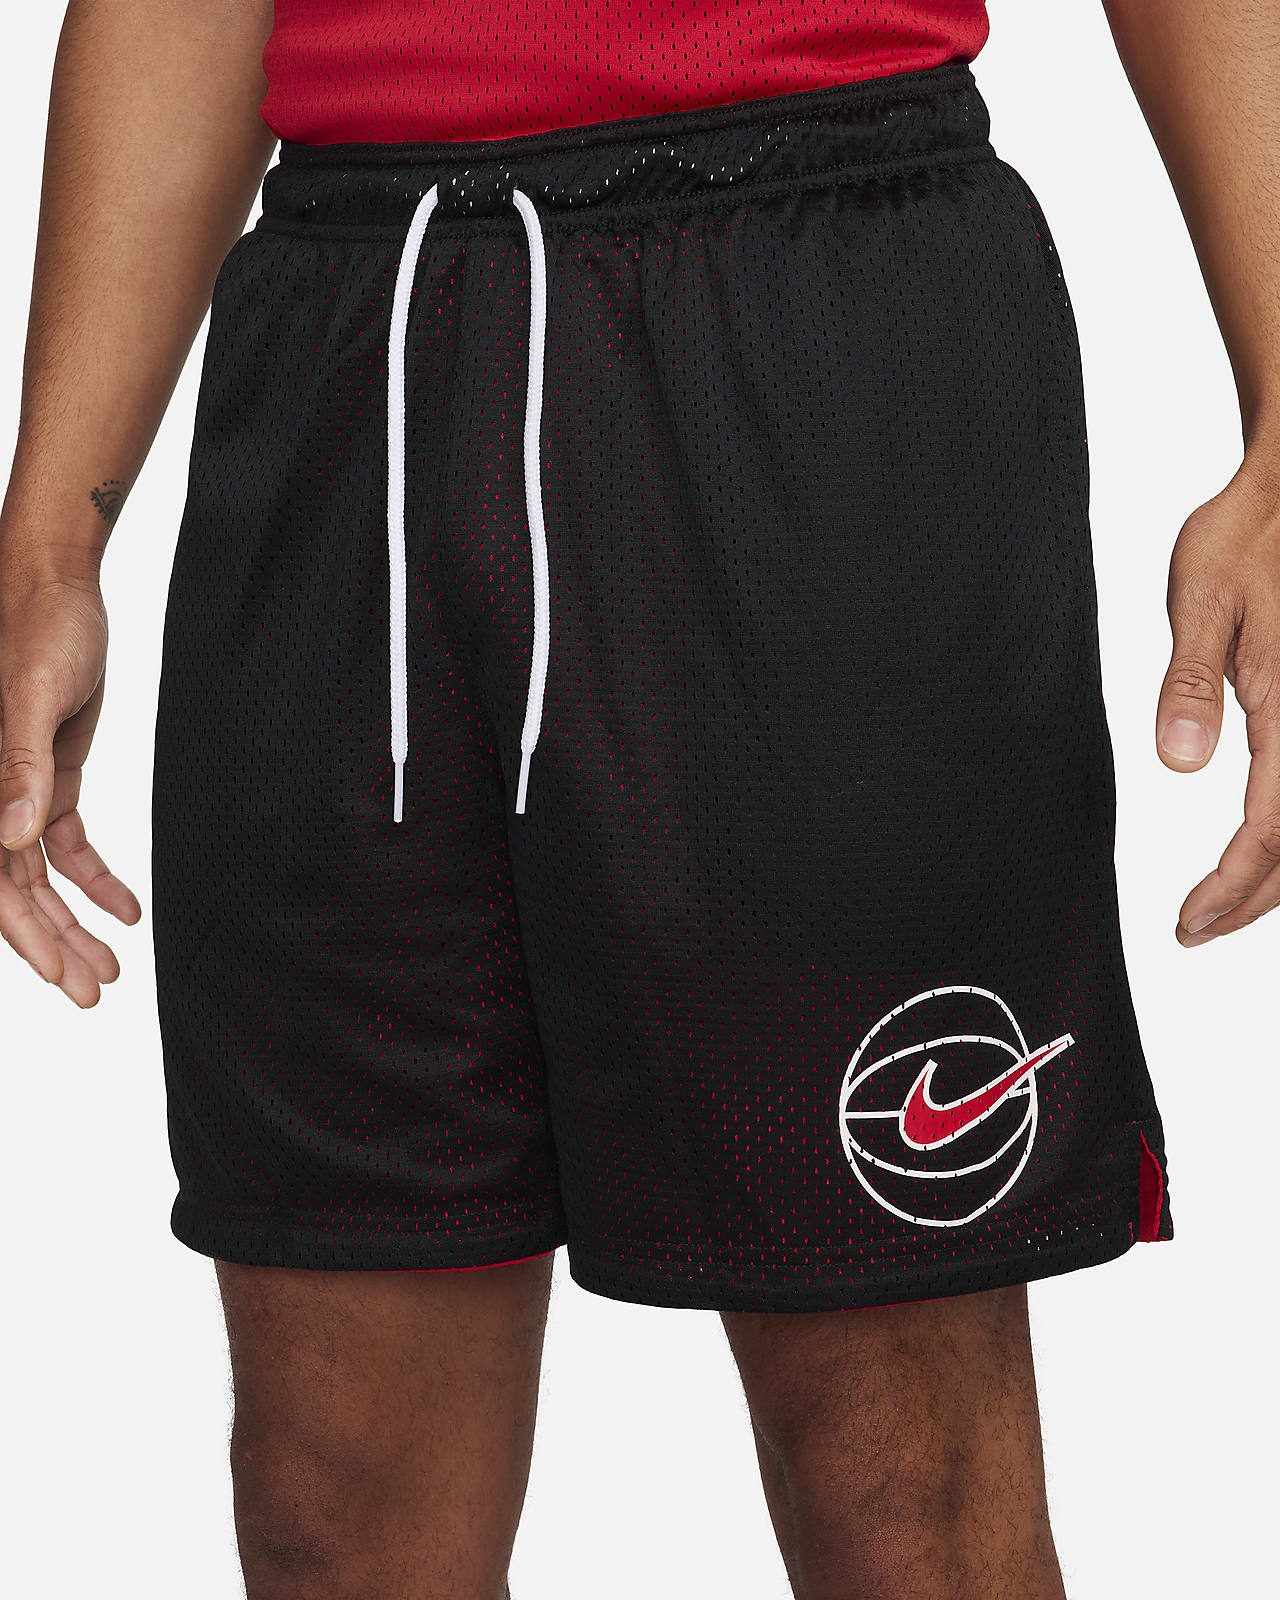 Los Angeles Clippers Nike NBA Authentics Dri-Fit Practice Shorts Men's  New